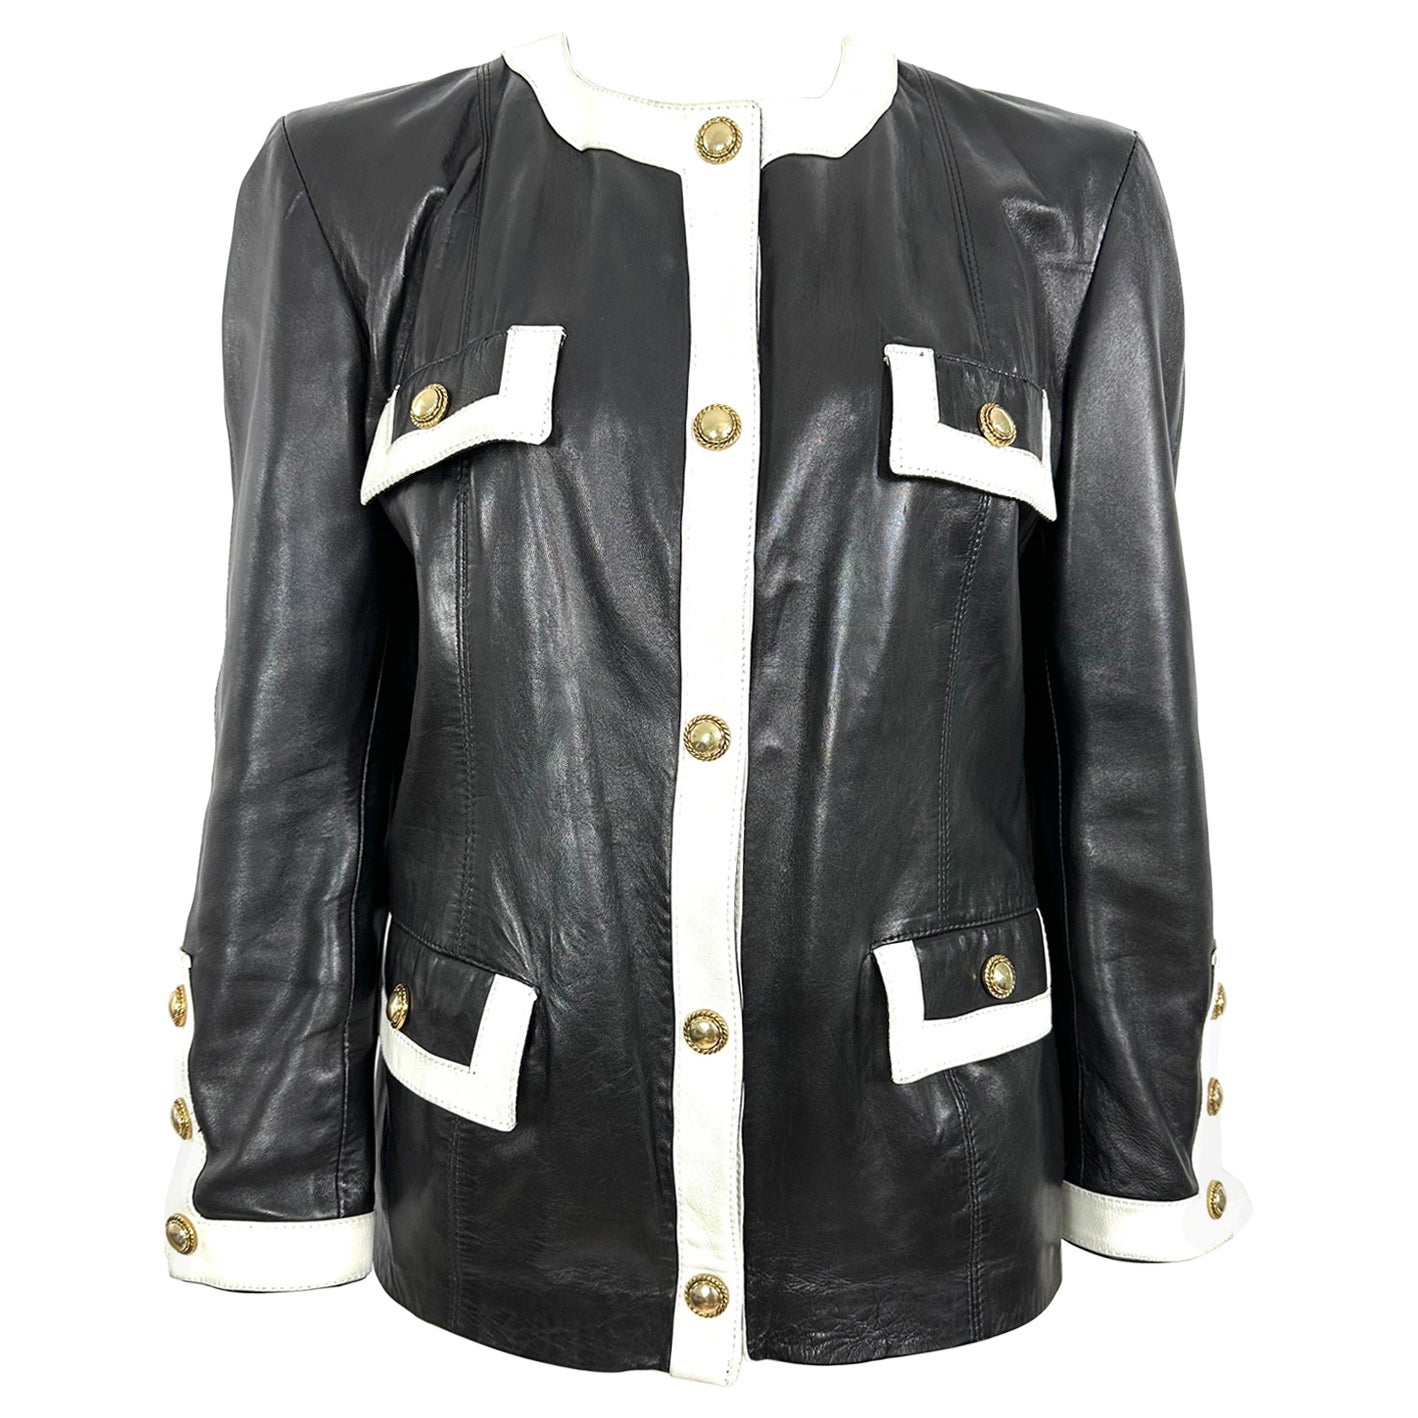 Pellessimo vintage black and white lamb leather jacket